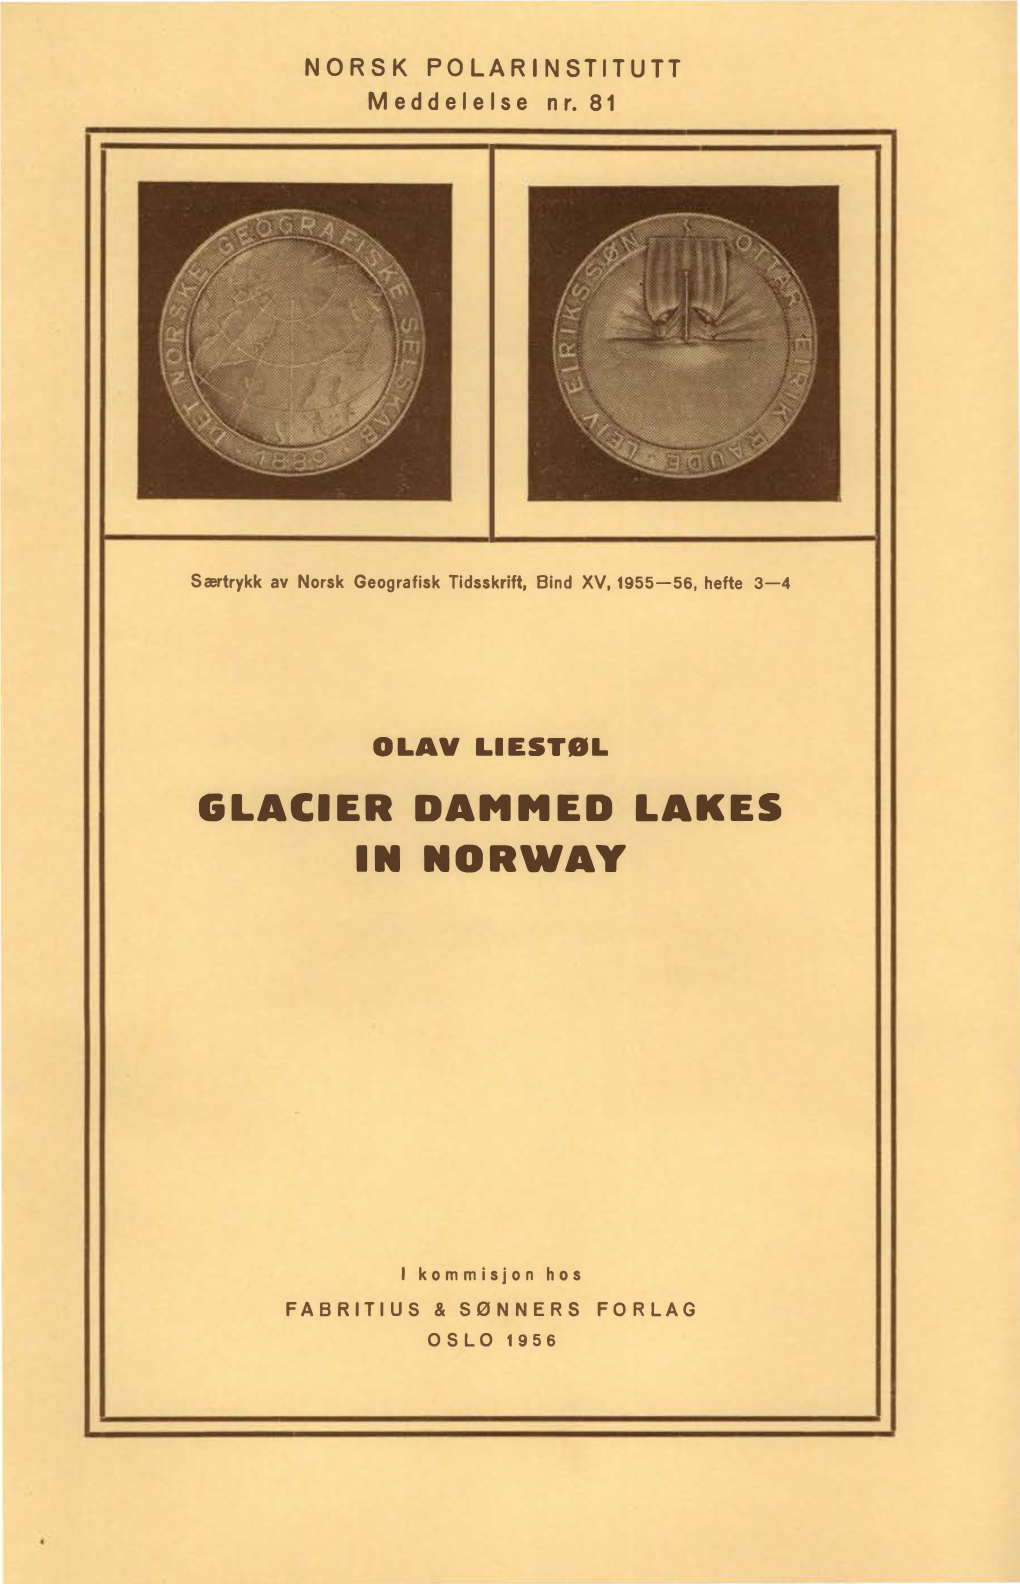 Glacier Dammed Lakes in Norway